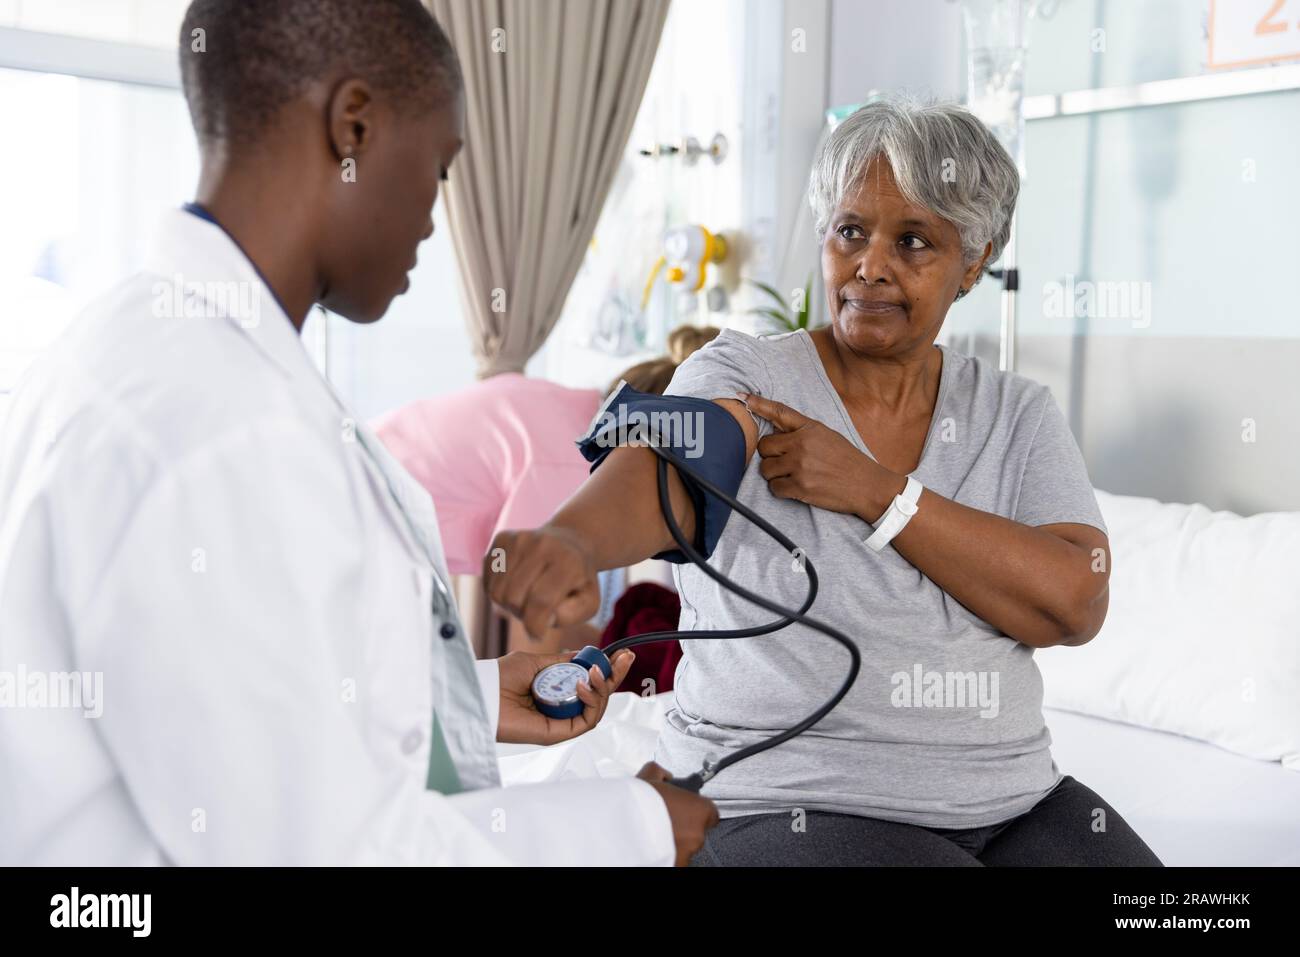 https://c8.alamy.com/comp/2RAWHKK/diverse-female-doctor-examining-senior-female-patient-measuring-blood-pressure-at-hospital-hospital-medicine-and-healthcare-services-unaltered-2RAWHKK.jpg